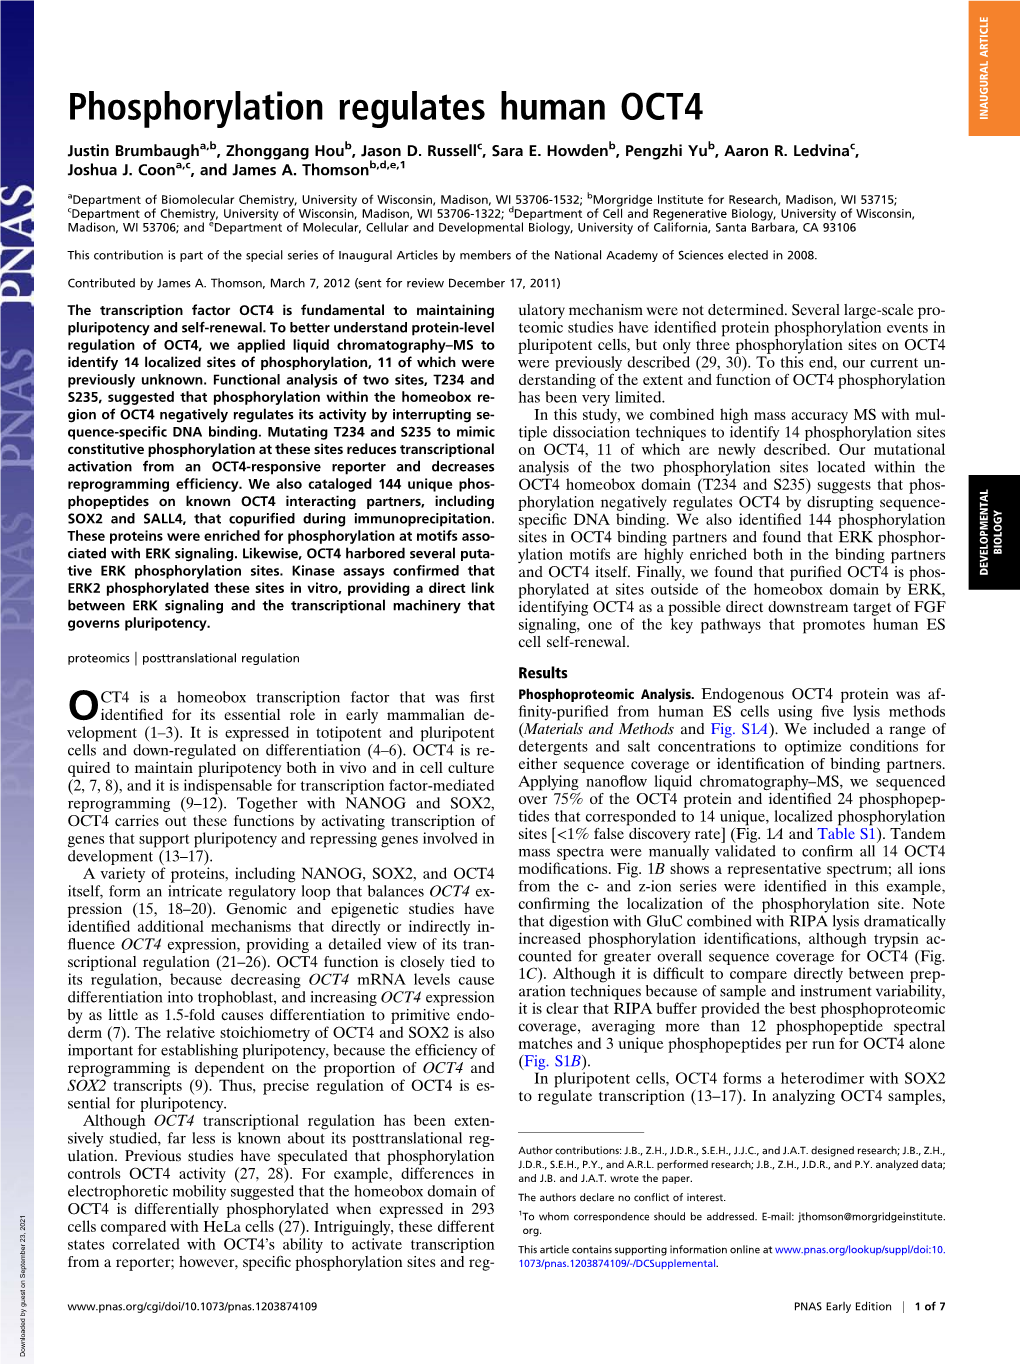 Phosphorylation Regulates Human OCT4 INAUGURAL ARTICLE